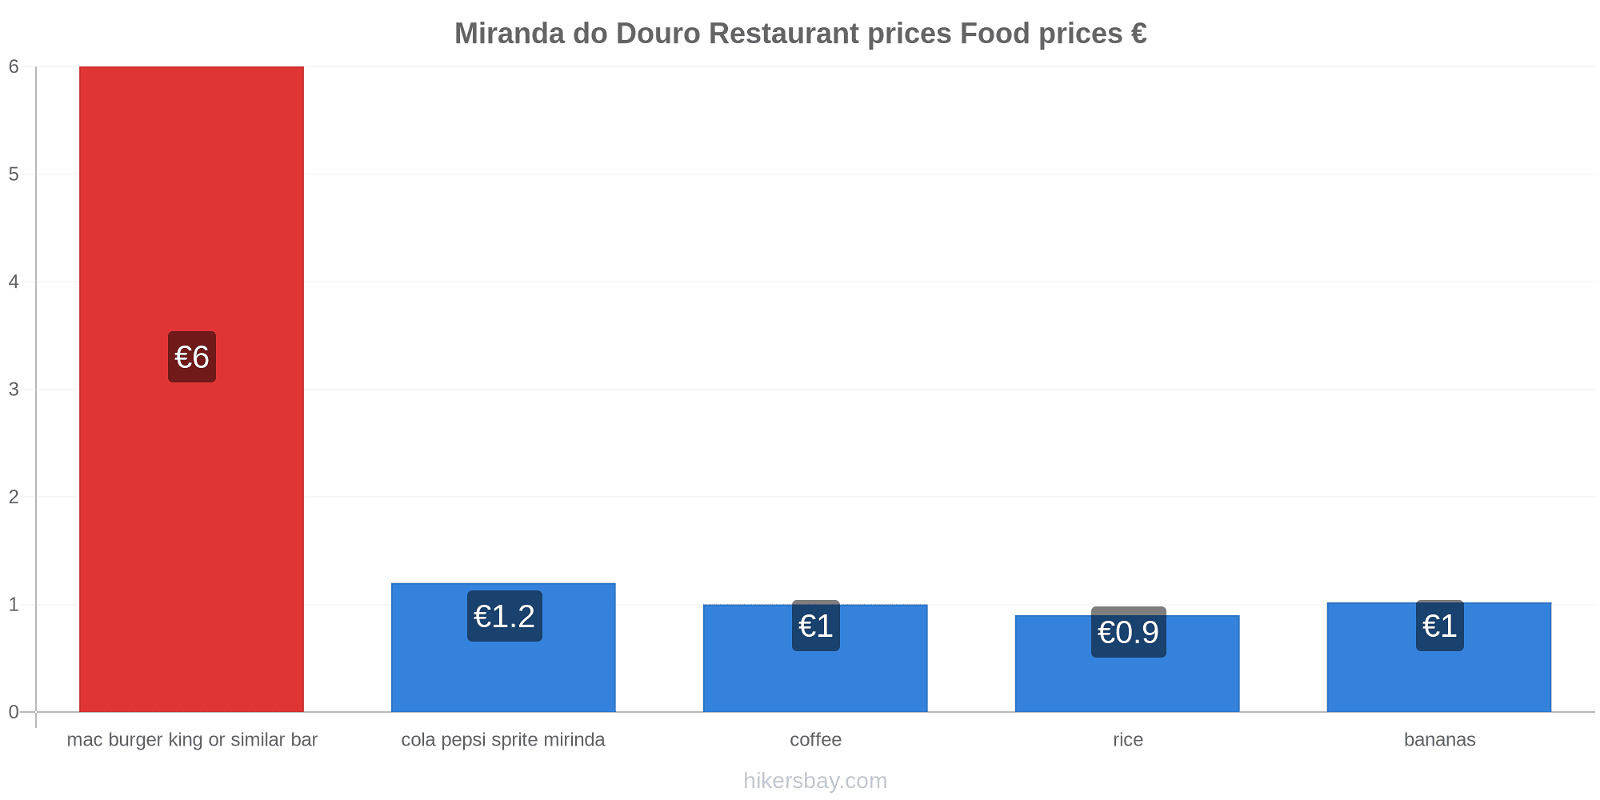 Miranda do Douro price changes hikersbay.com